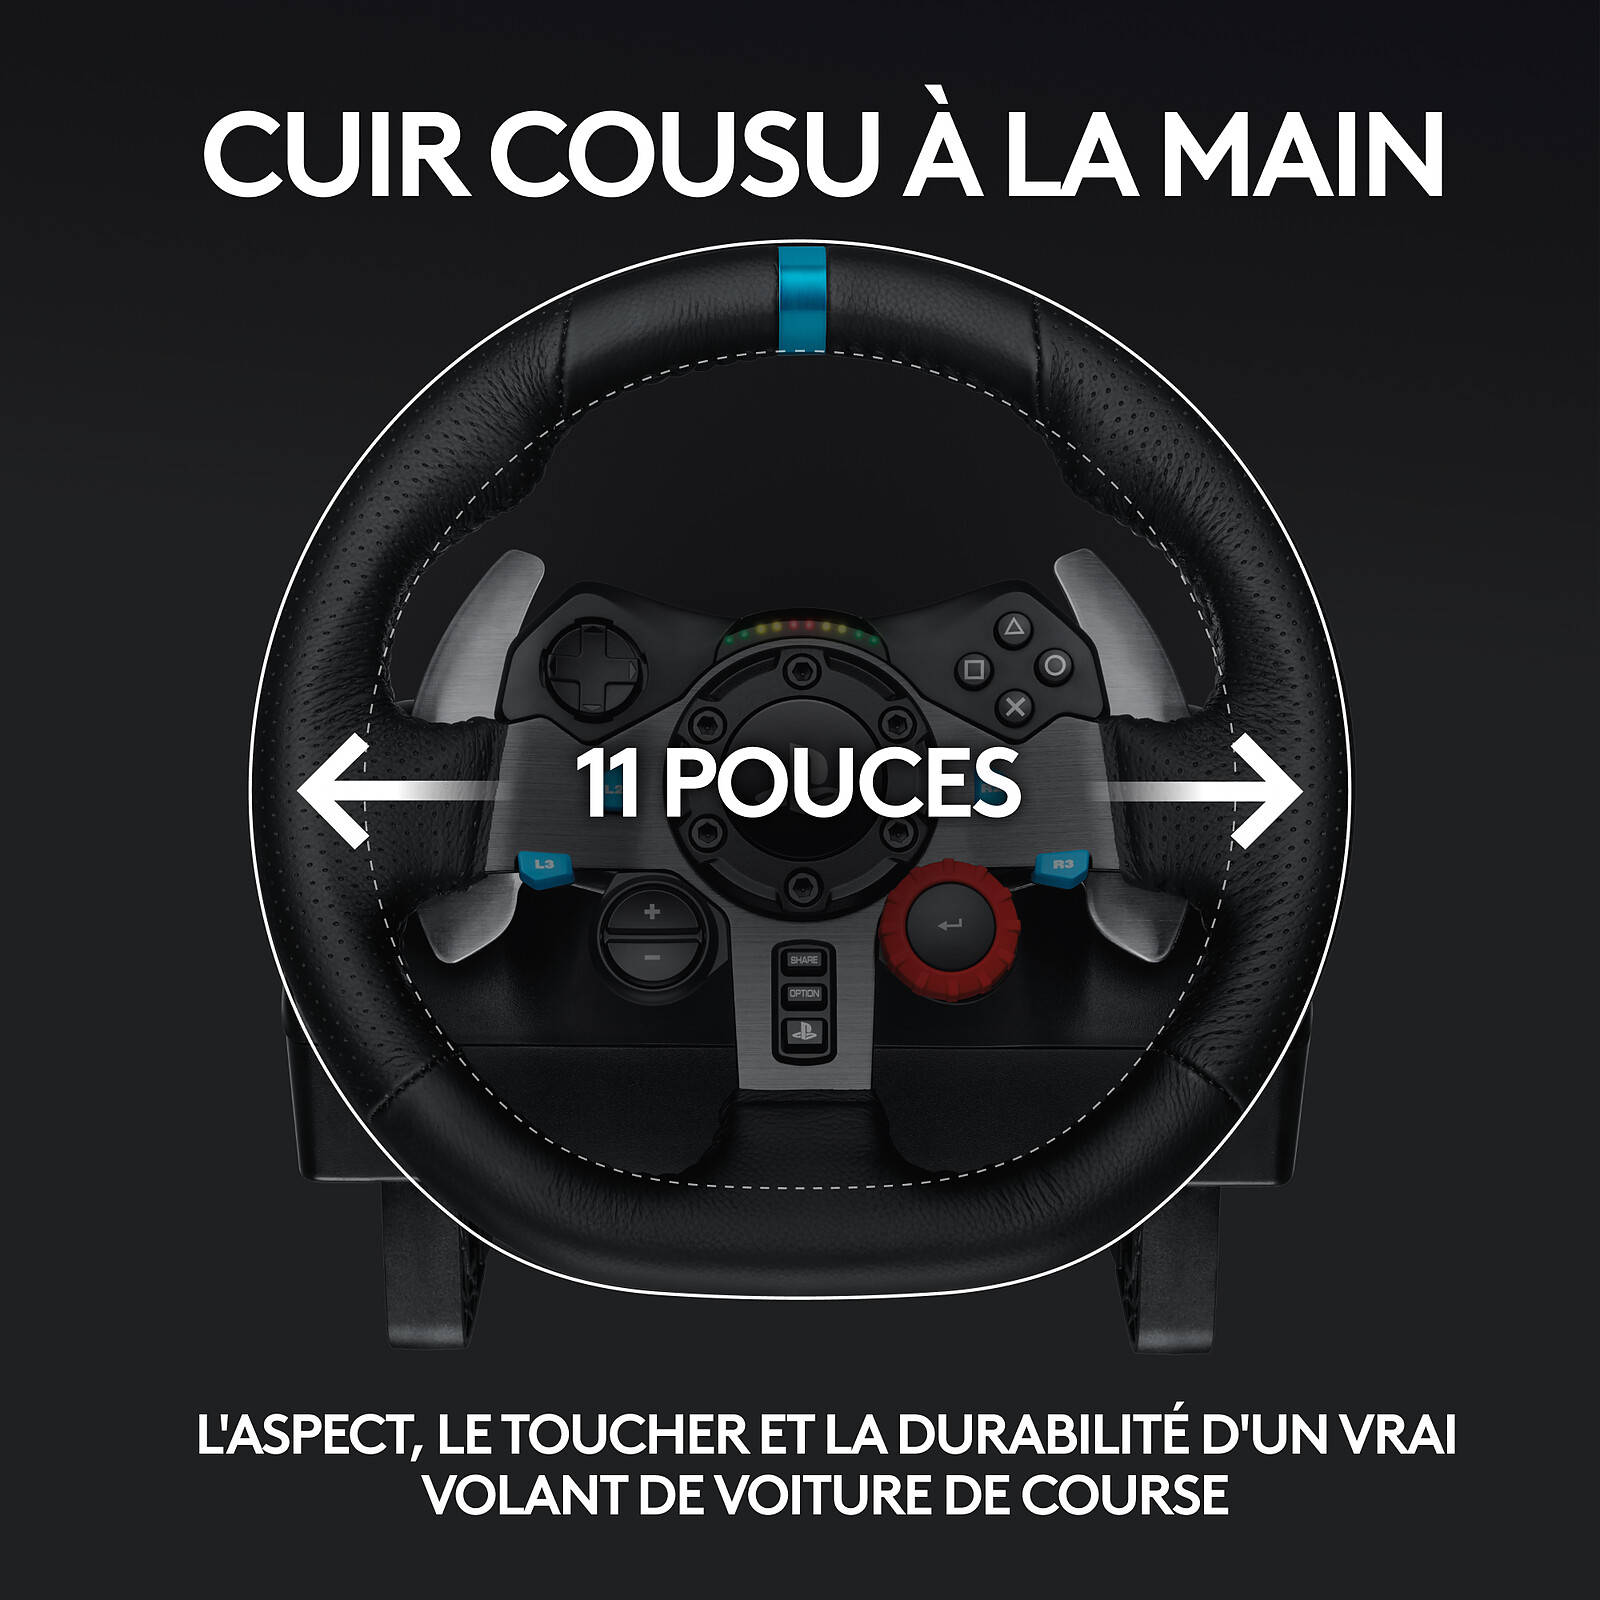 Logitech G29 Driving Force - PC game racing wheel - LDLC 3-year warranty